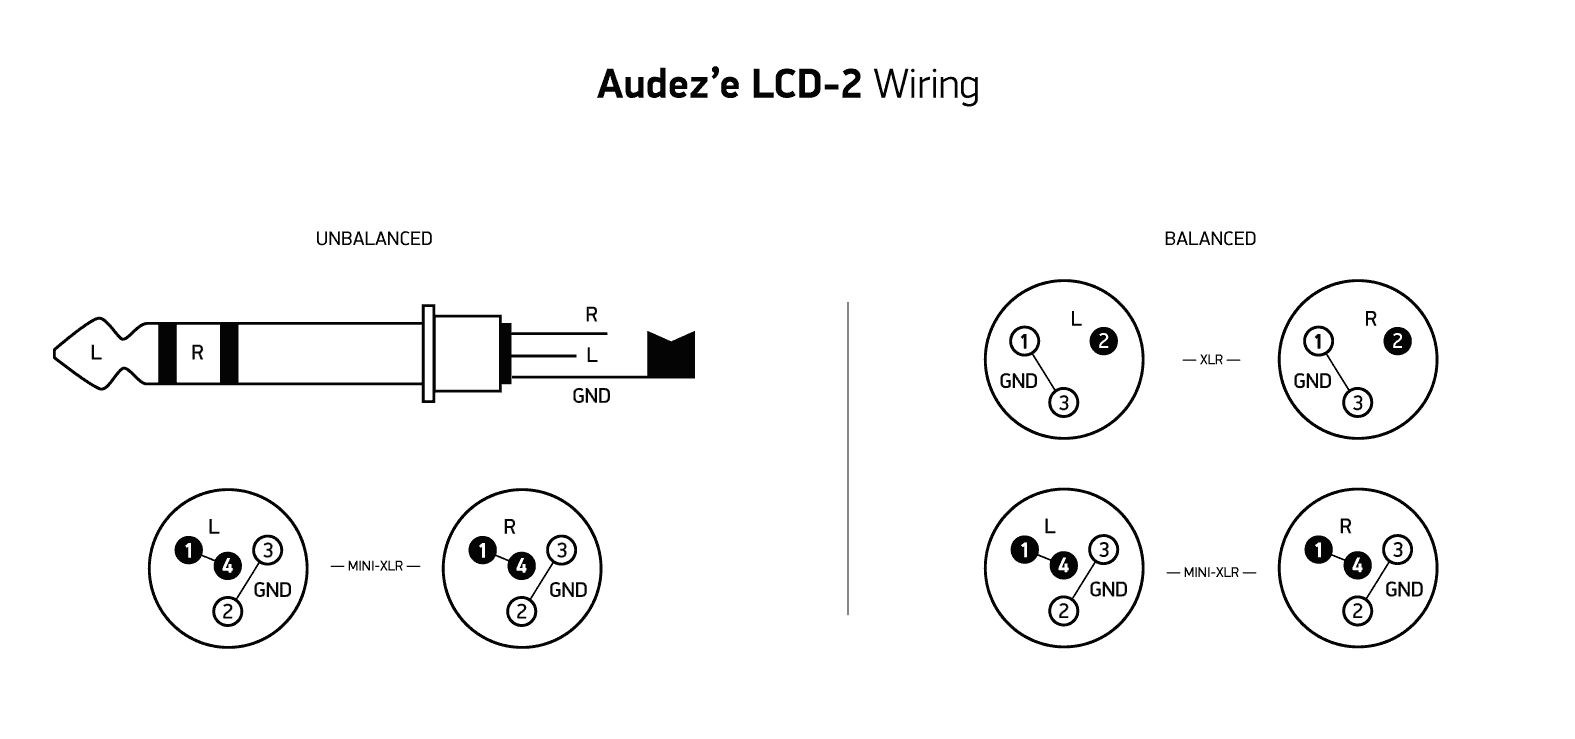 xlr balanced female to 1/3 stereo male wiring diagram